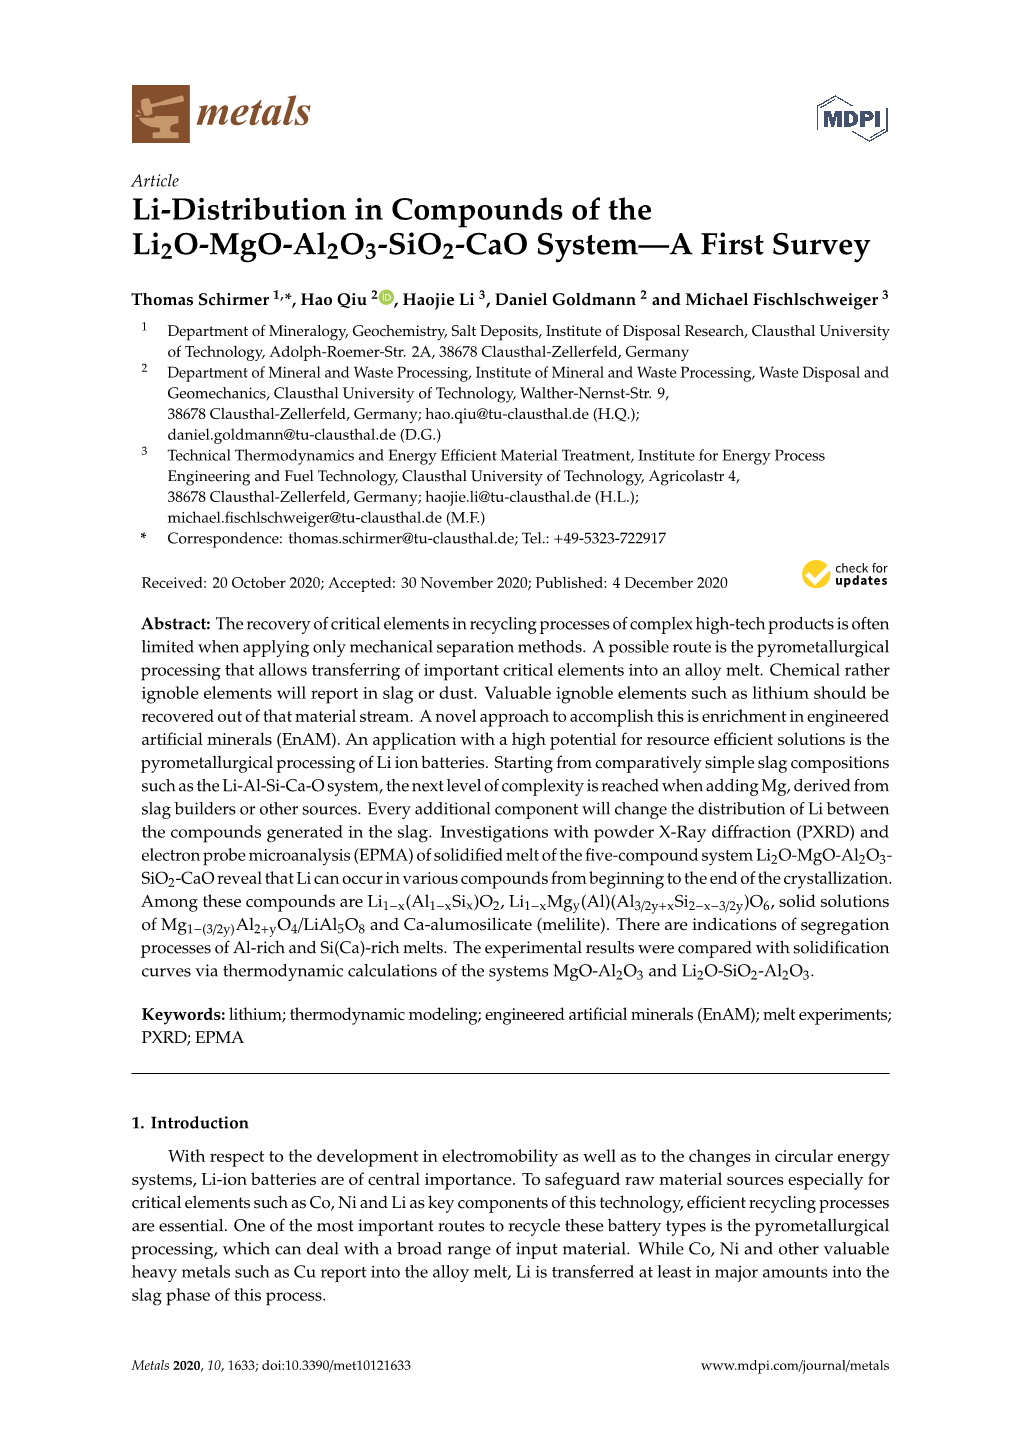 Li-Distribution in Compounds of the Li2o-Mgo-Al2o3-Sio2-Cao System—A First Survey